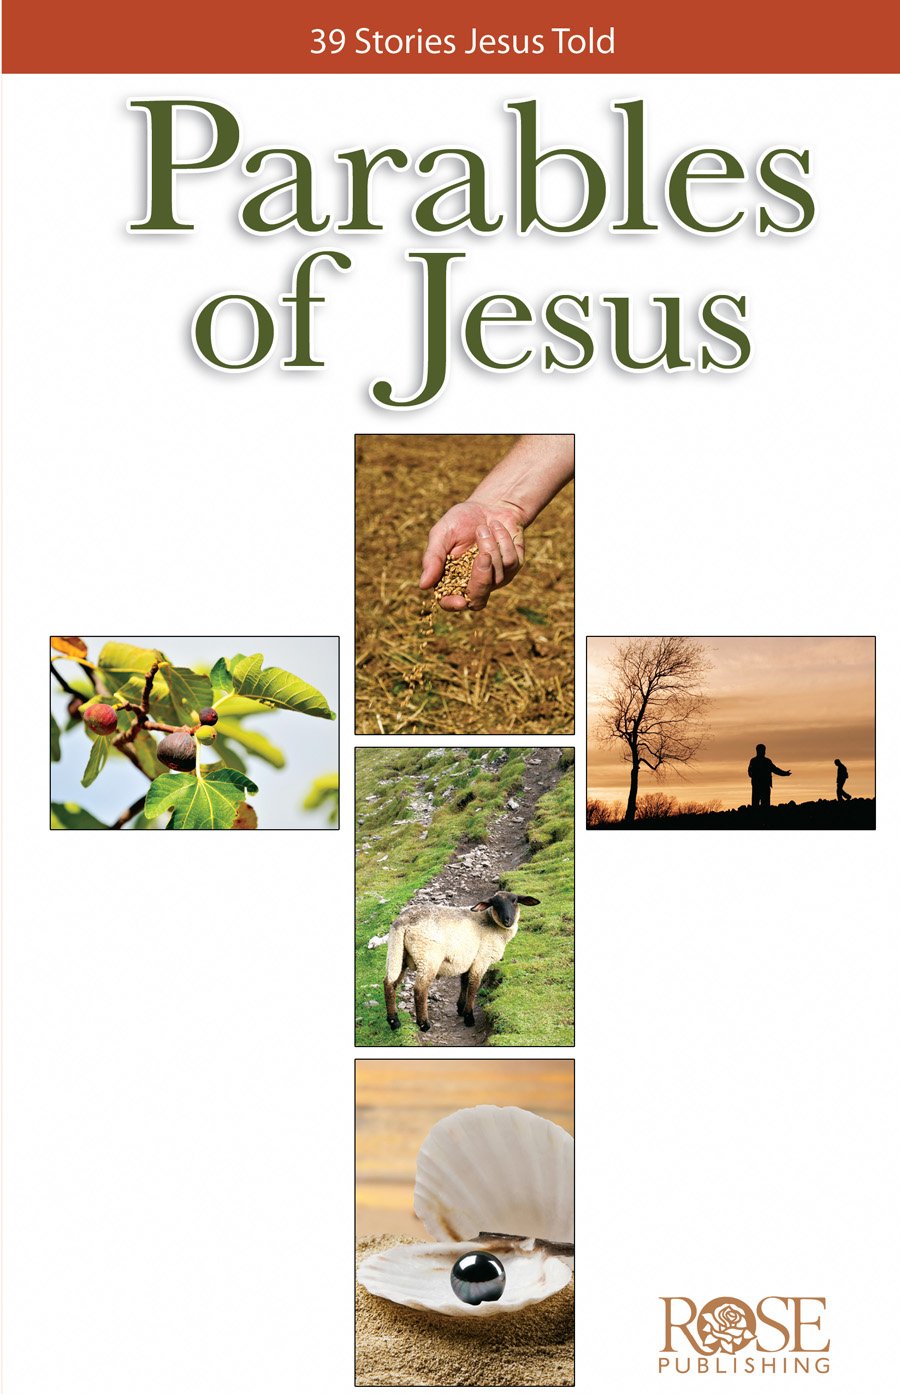 PAMPHLET- Parables of Jesus: 39 Stories Jesus Told